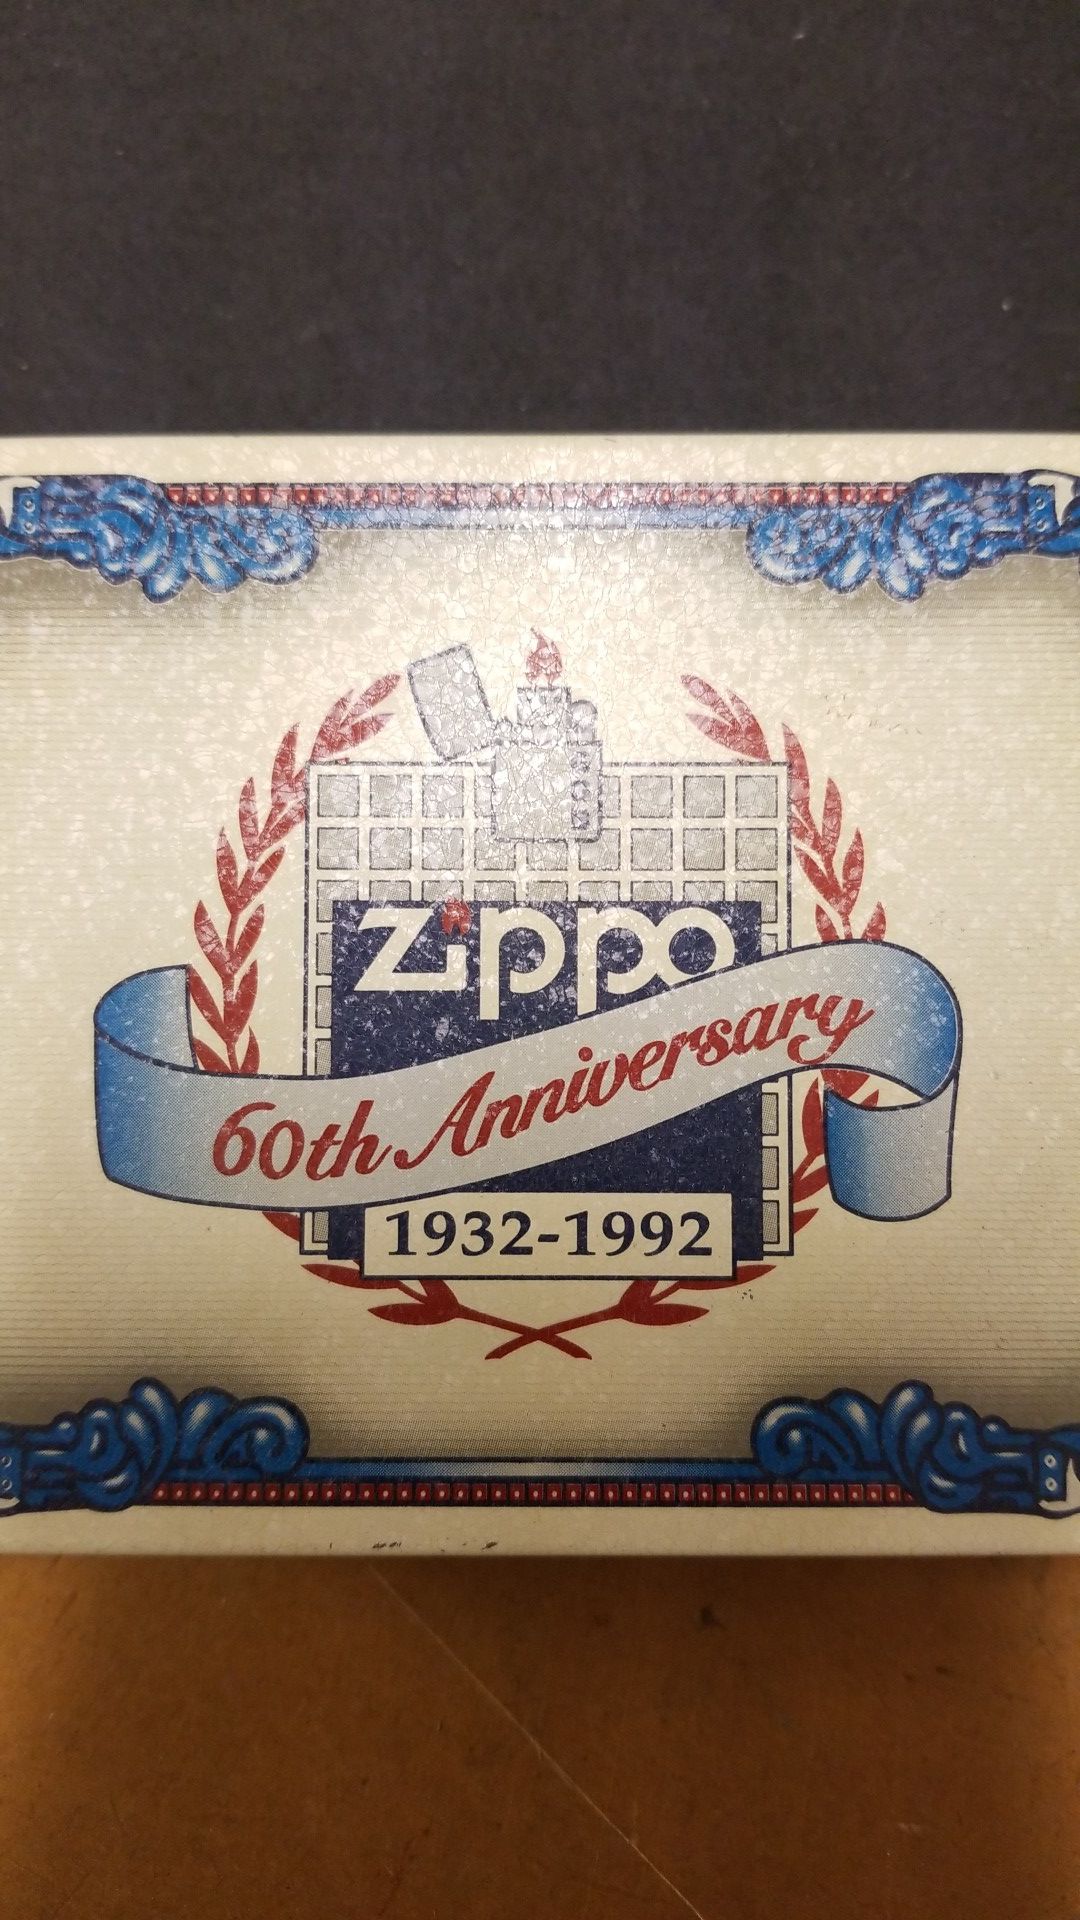 Zippo, 60th Annivesary 1932-1992.